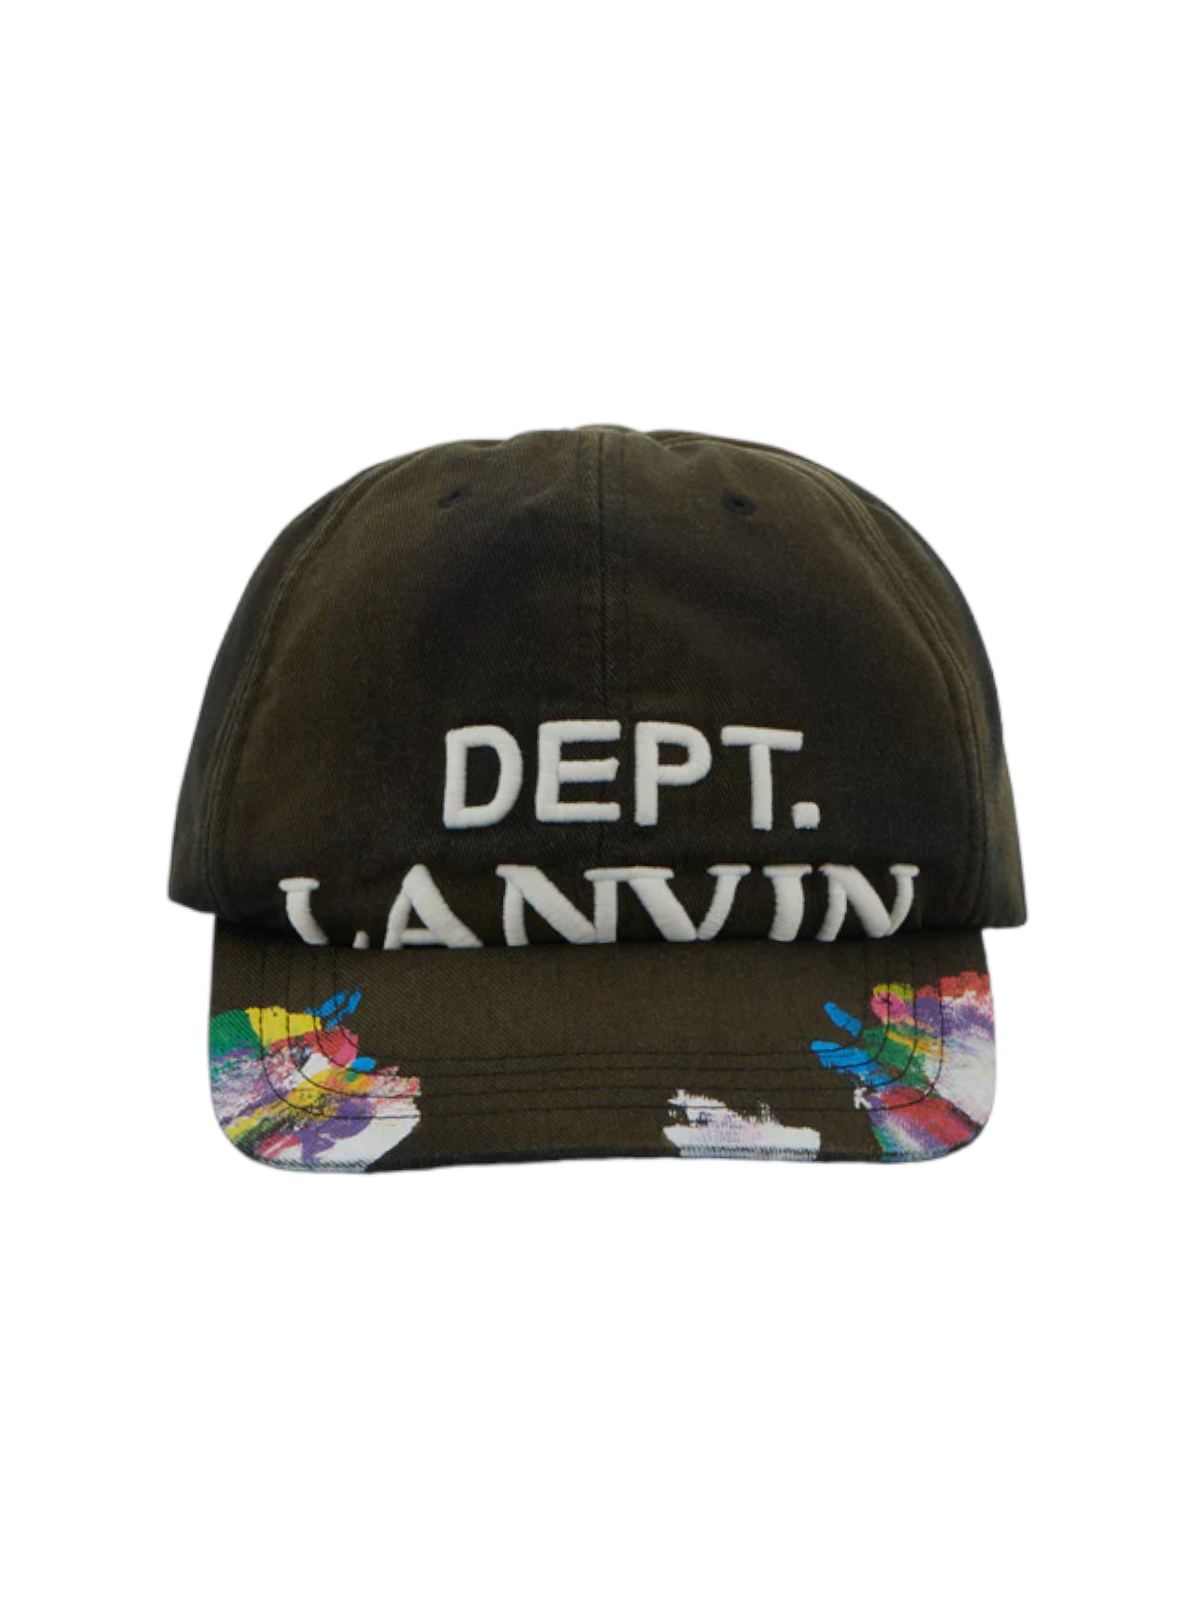 Lanvin x Gallery Dept. Paint Splatter Cap